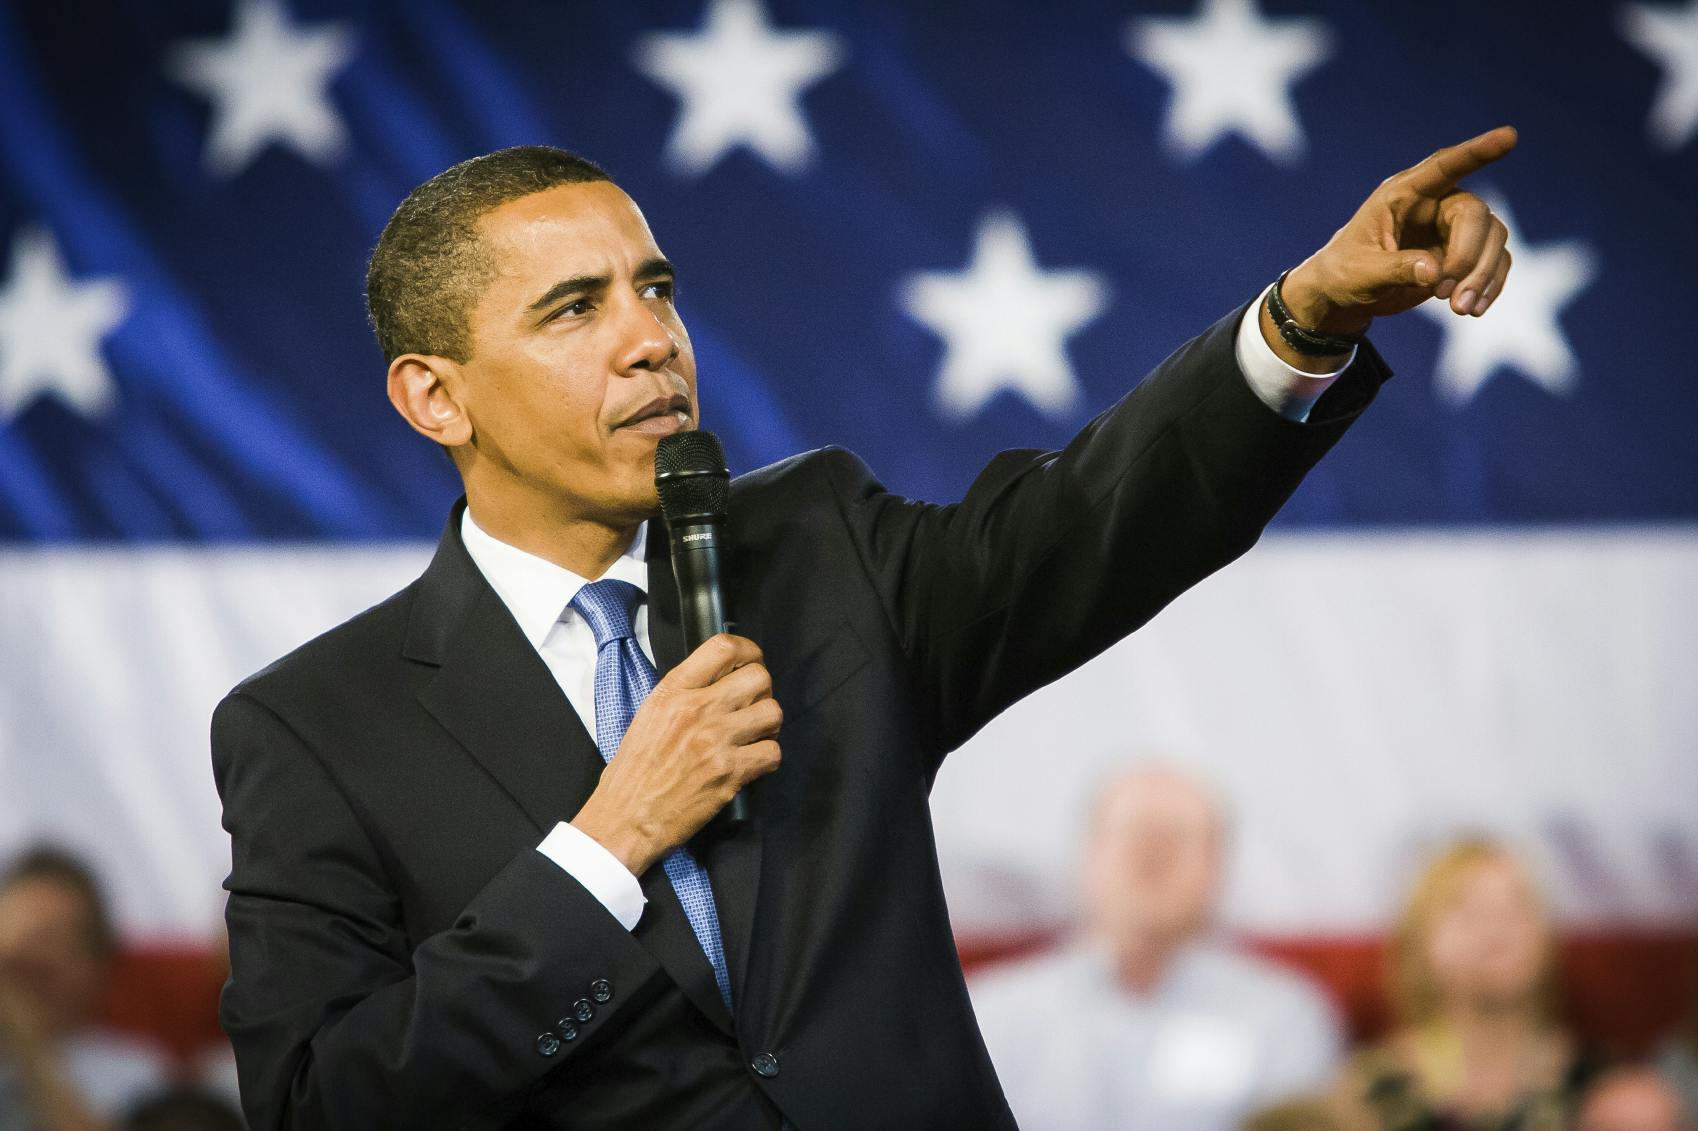 WATCH: Obama ponders his next career move